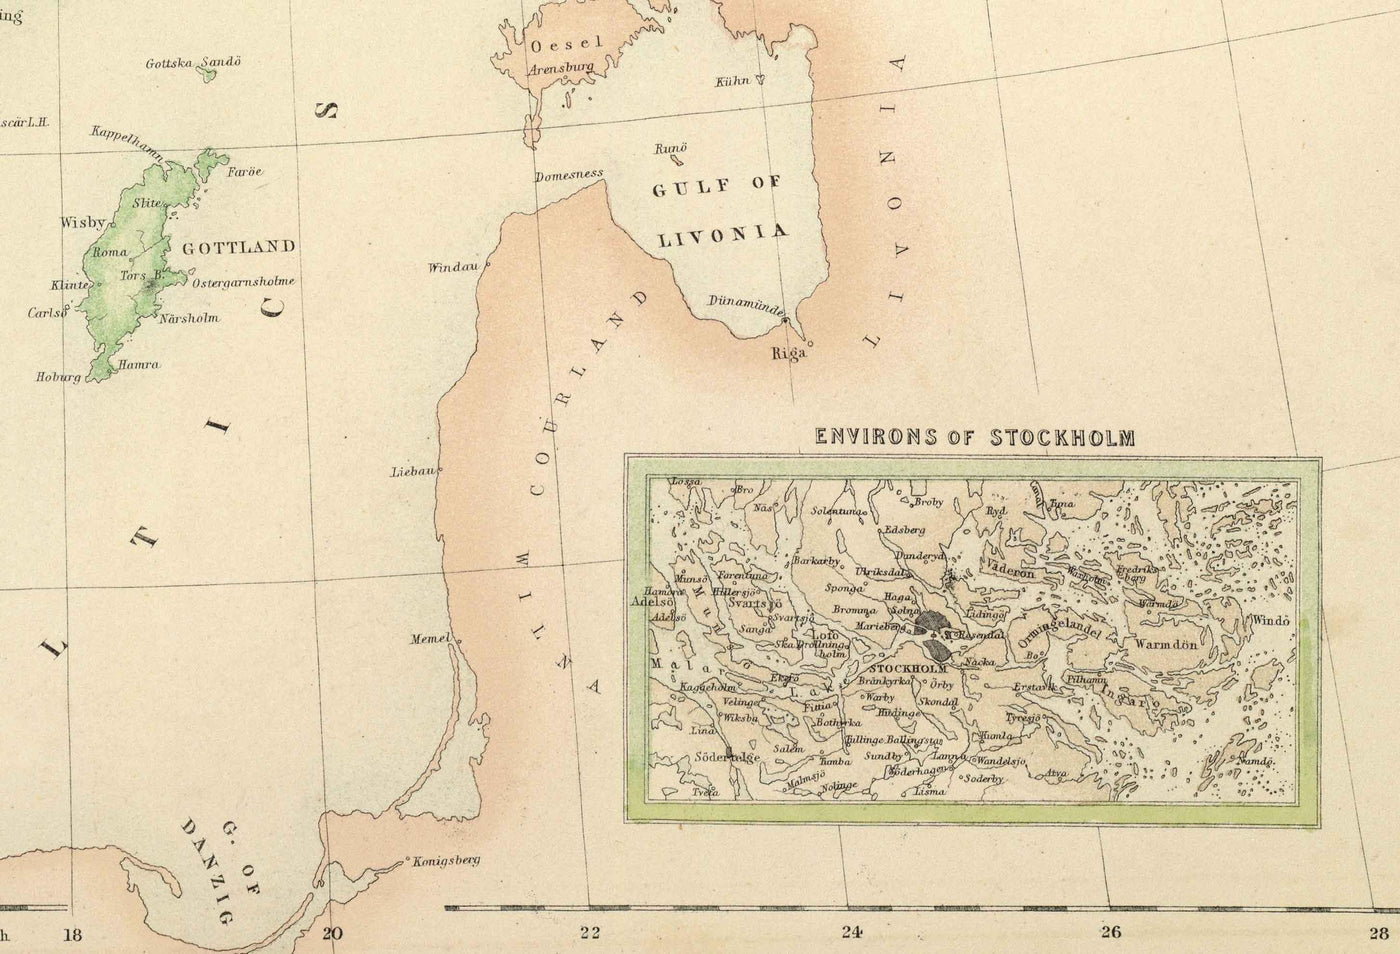 Old Map of Sweden, Norway & Russian Finland, 1872 by Fullarton - Scandinavia, Denmark, Baltic Sea, Gulf of Bothnia